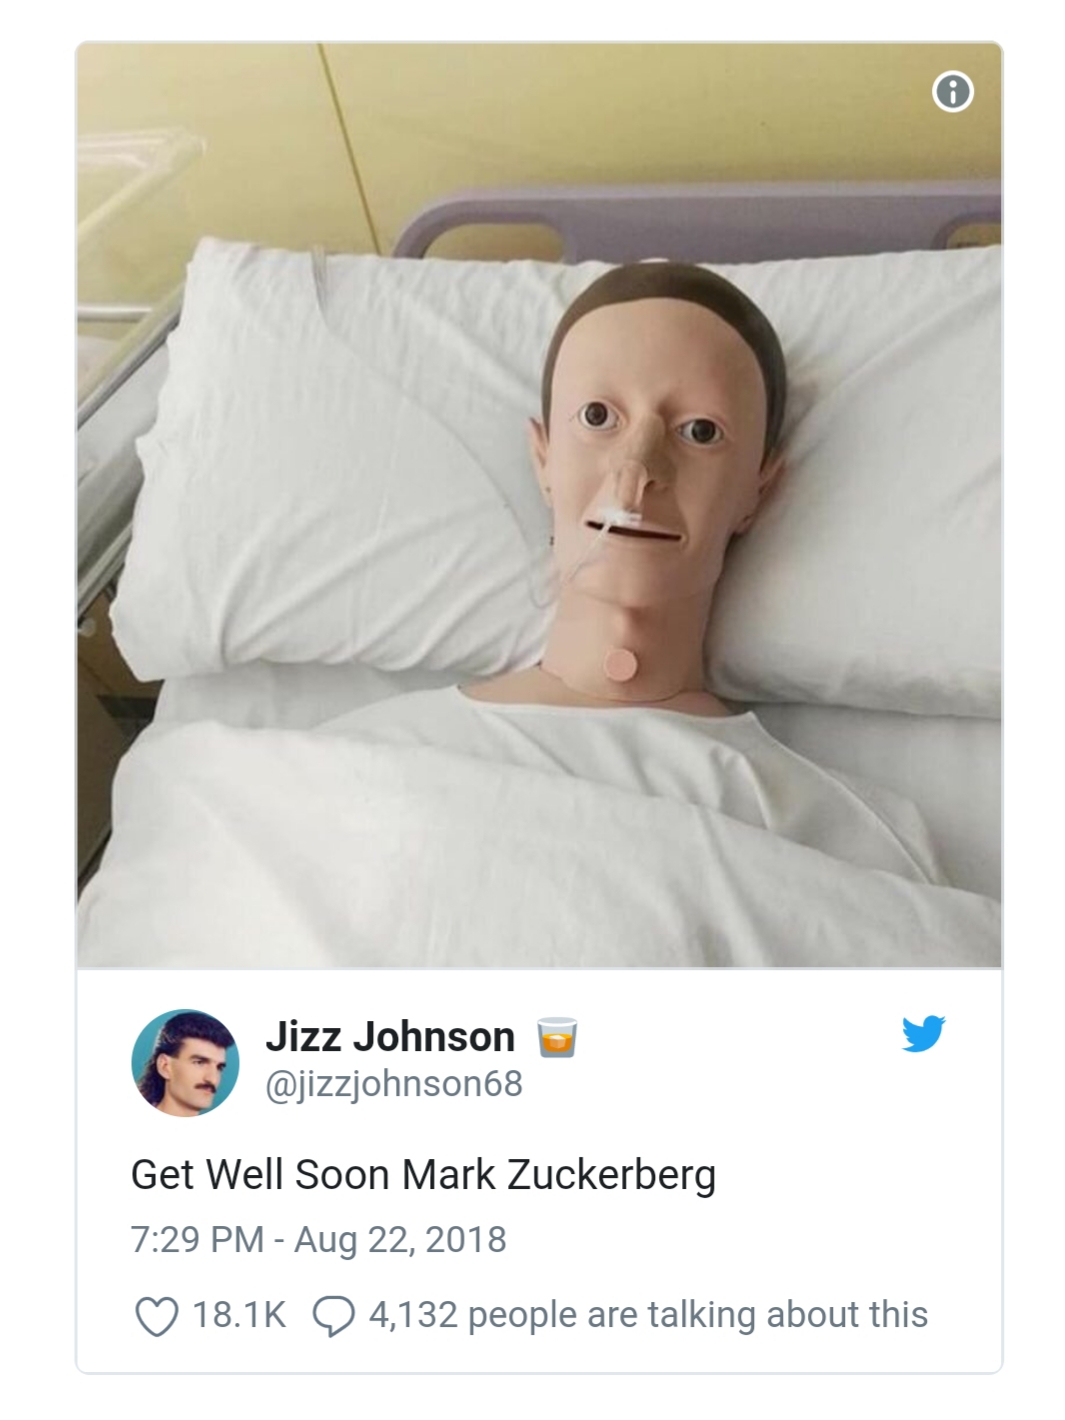 memes - mark zuckerberg memes - Jizz Johnson Get Well Soon Mark Zuckerberg 4,